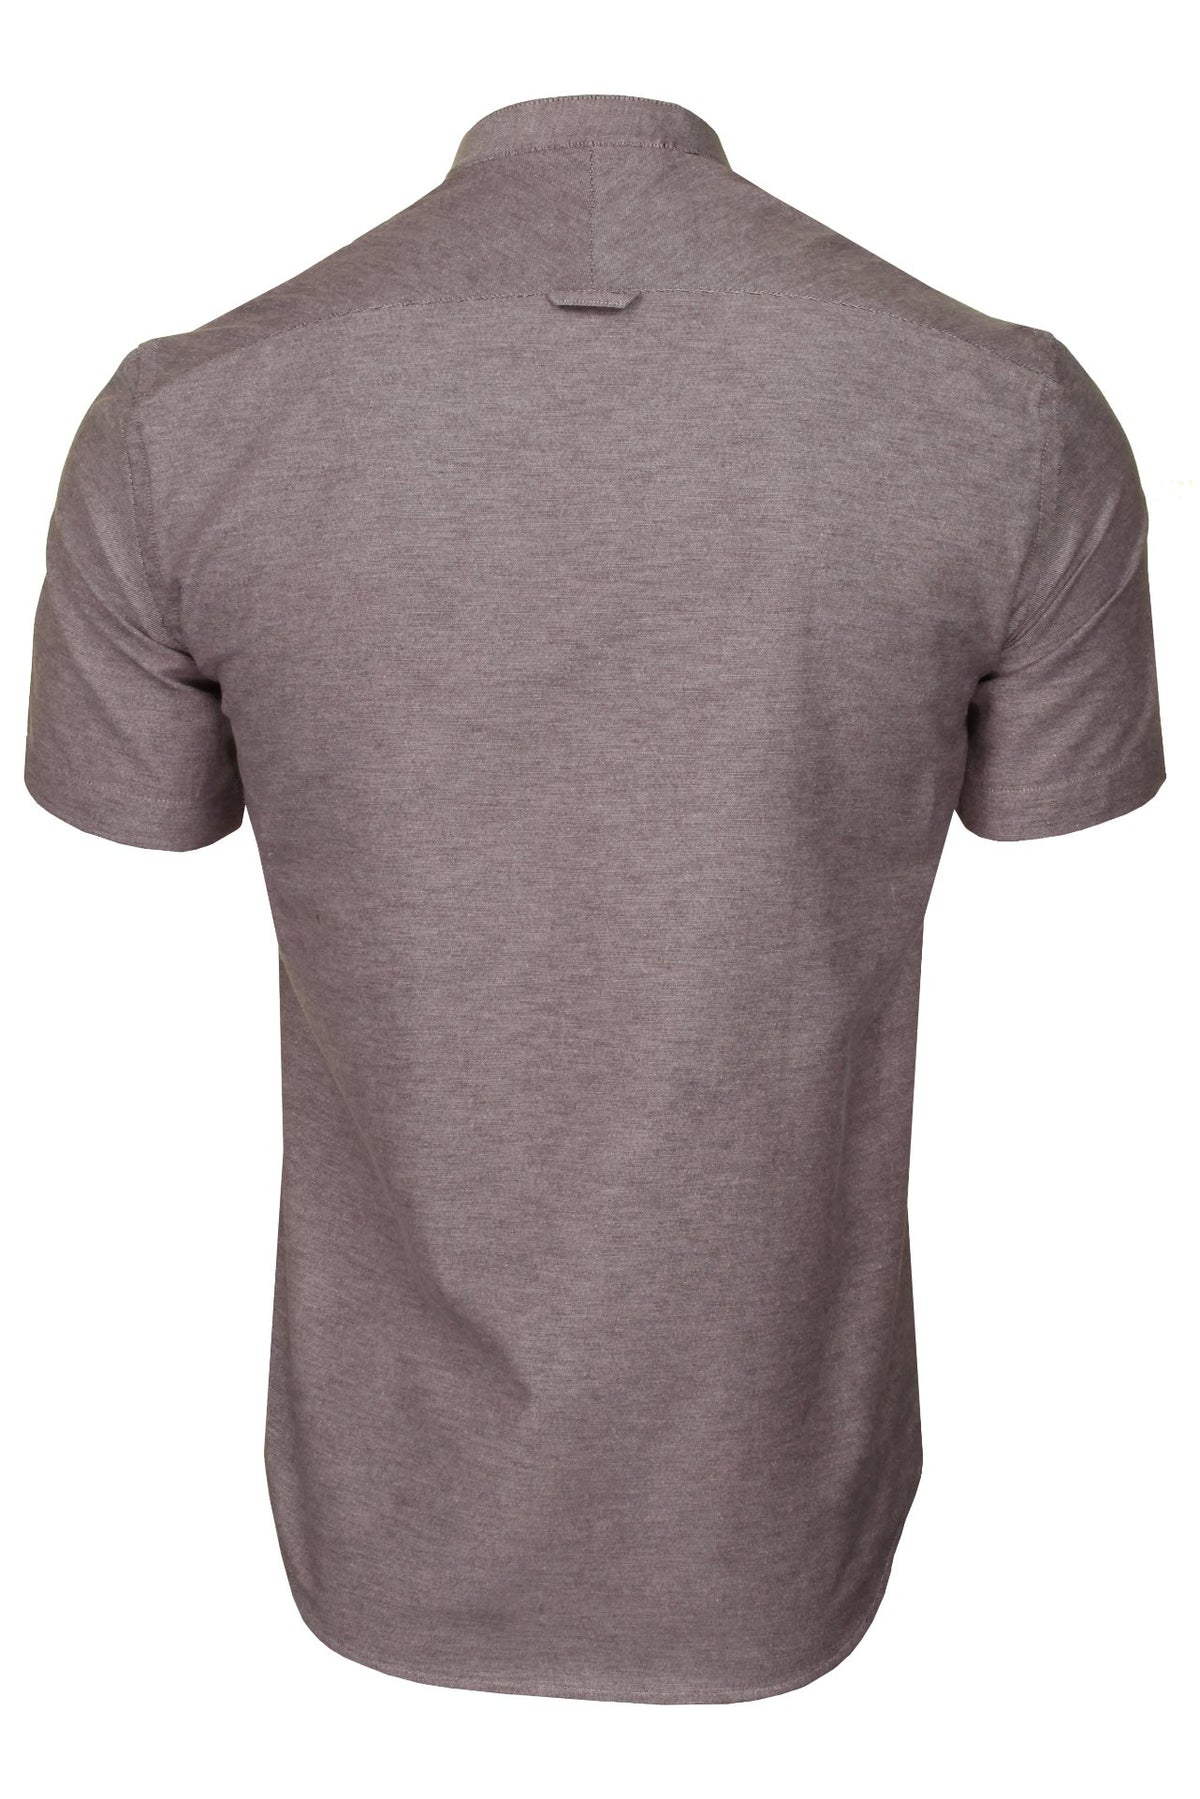 Xact Men's Grandad Collar Oxford Shirt Slim Fit Short Sleeved, 03, Xsh1022, Light Burgundy